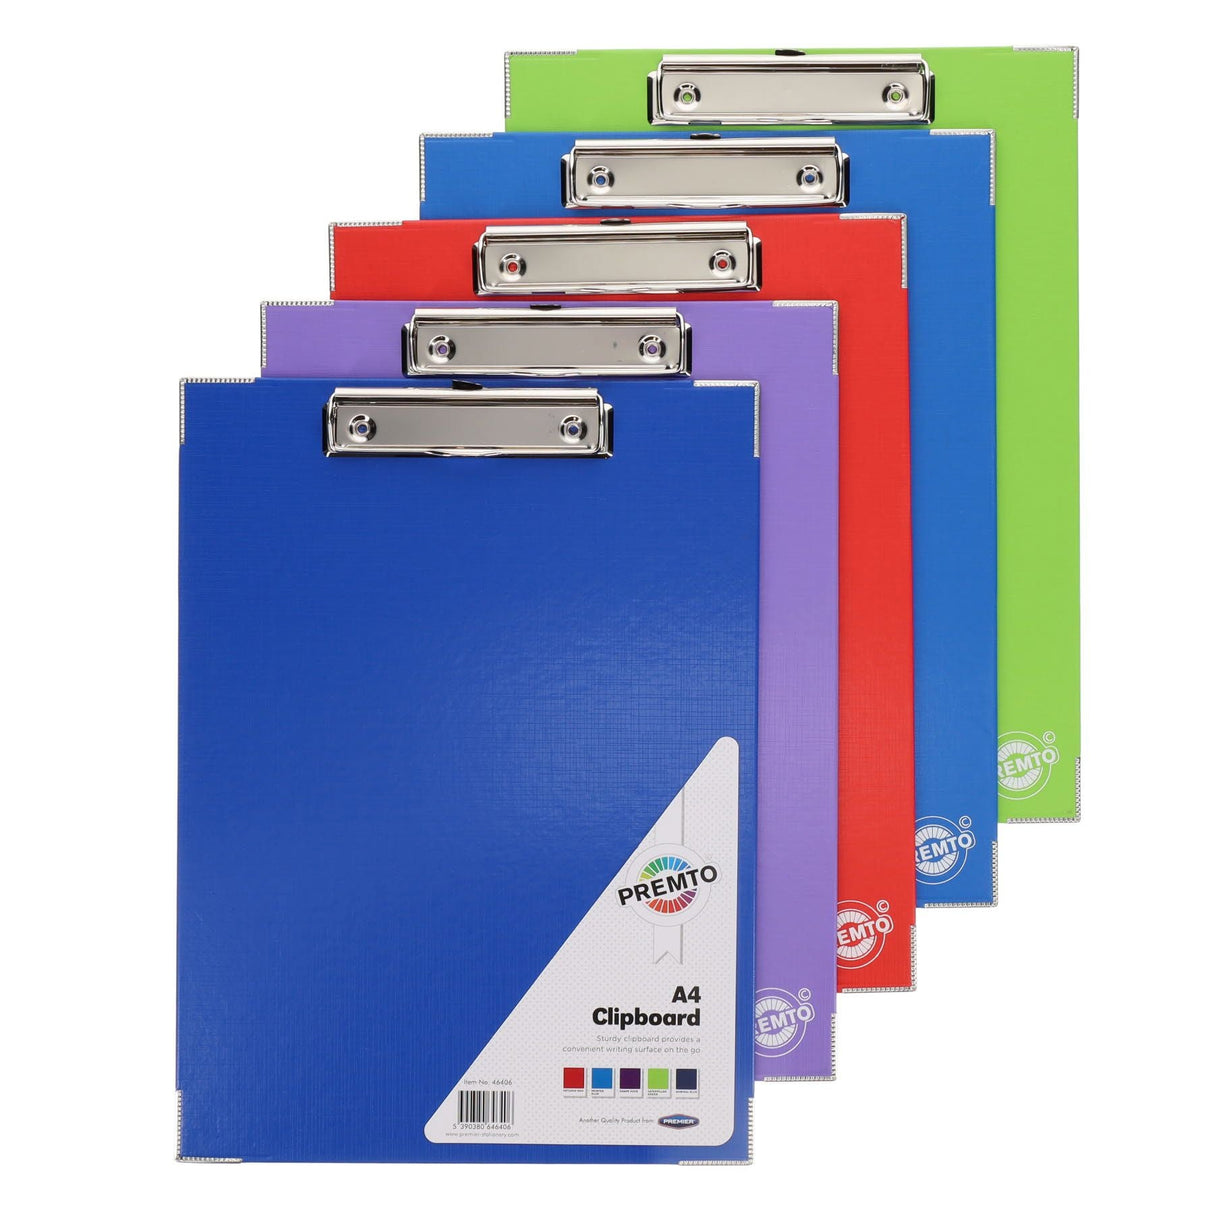 Premto A4 Clipboard - Original - Pack of 5-Clipboards- Buy Online at Stationery Shop UK